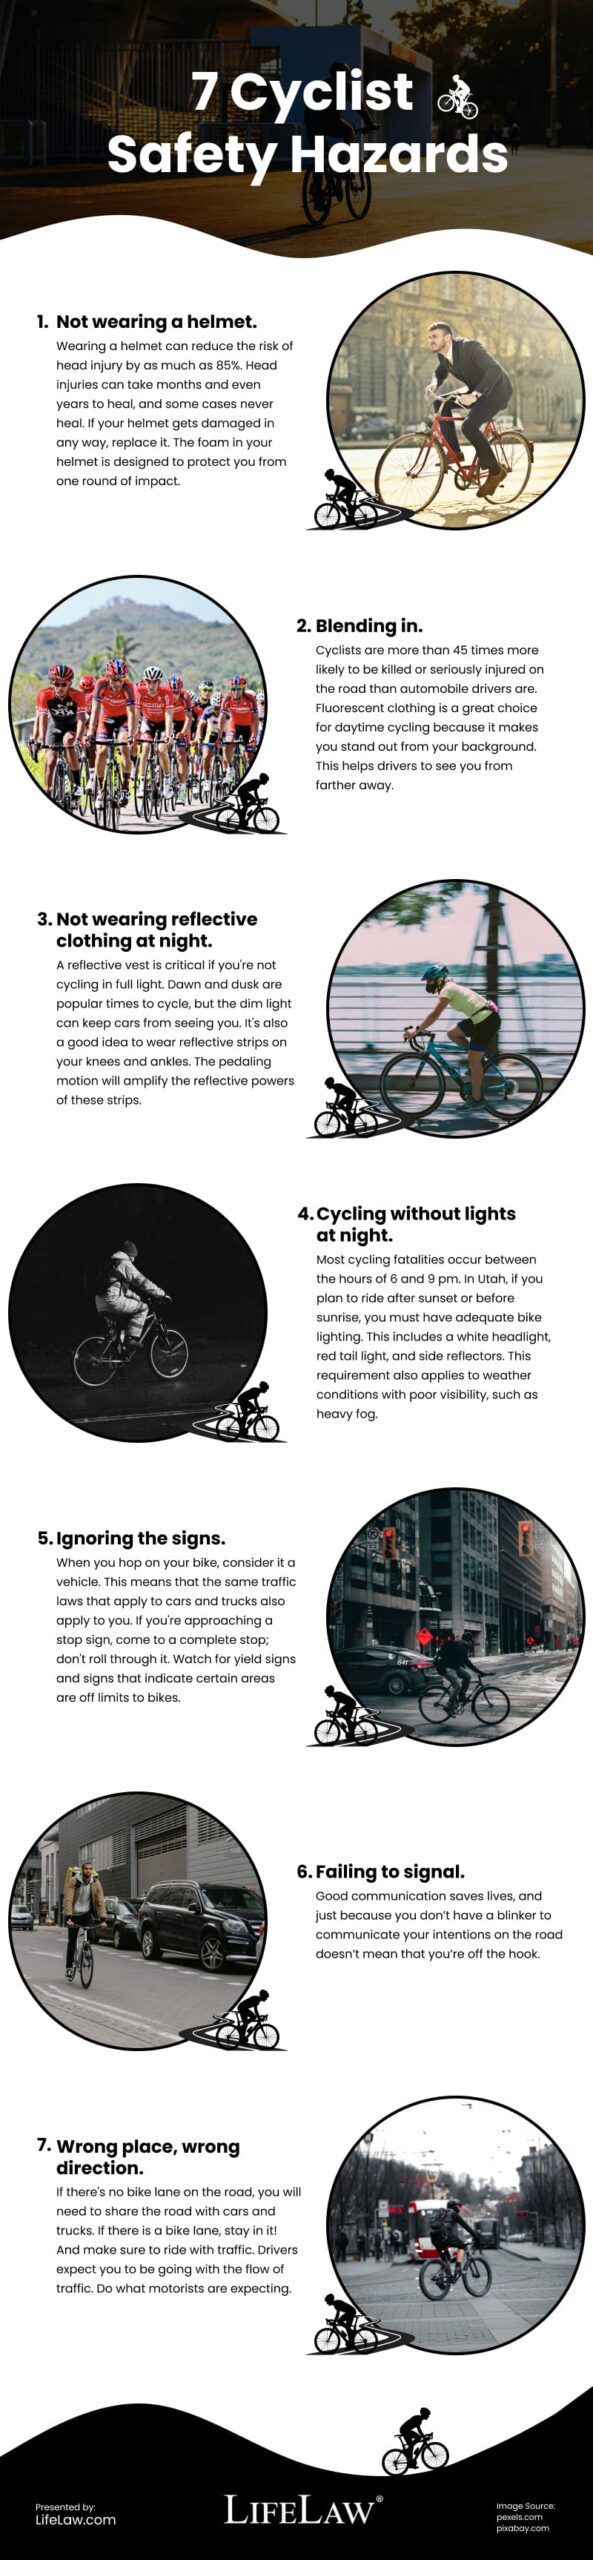 7 Cyclist Safety Hazards Infographic